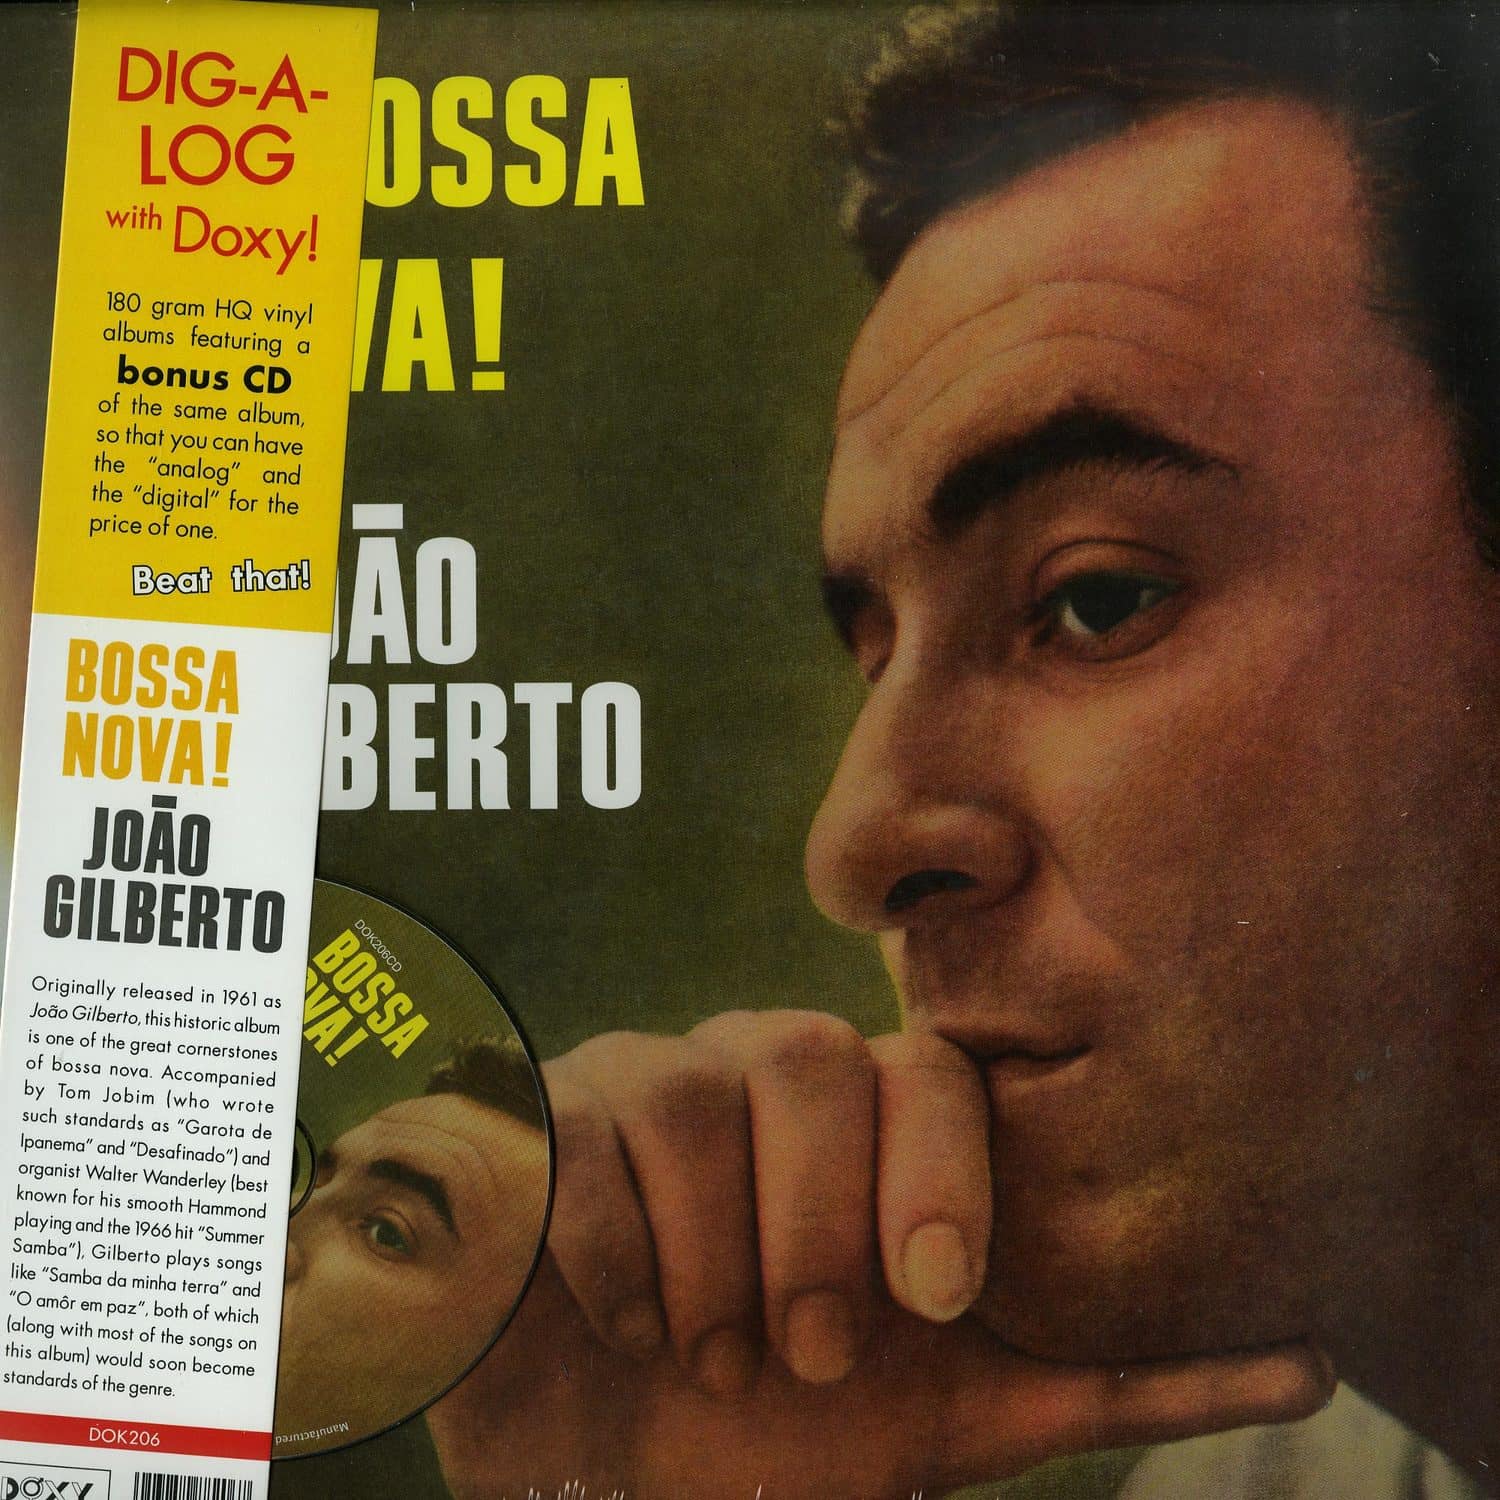 Joao Gilberto - BOSSA NOVA! 